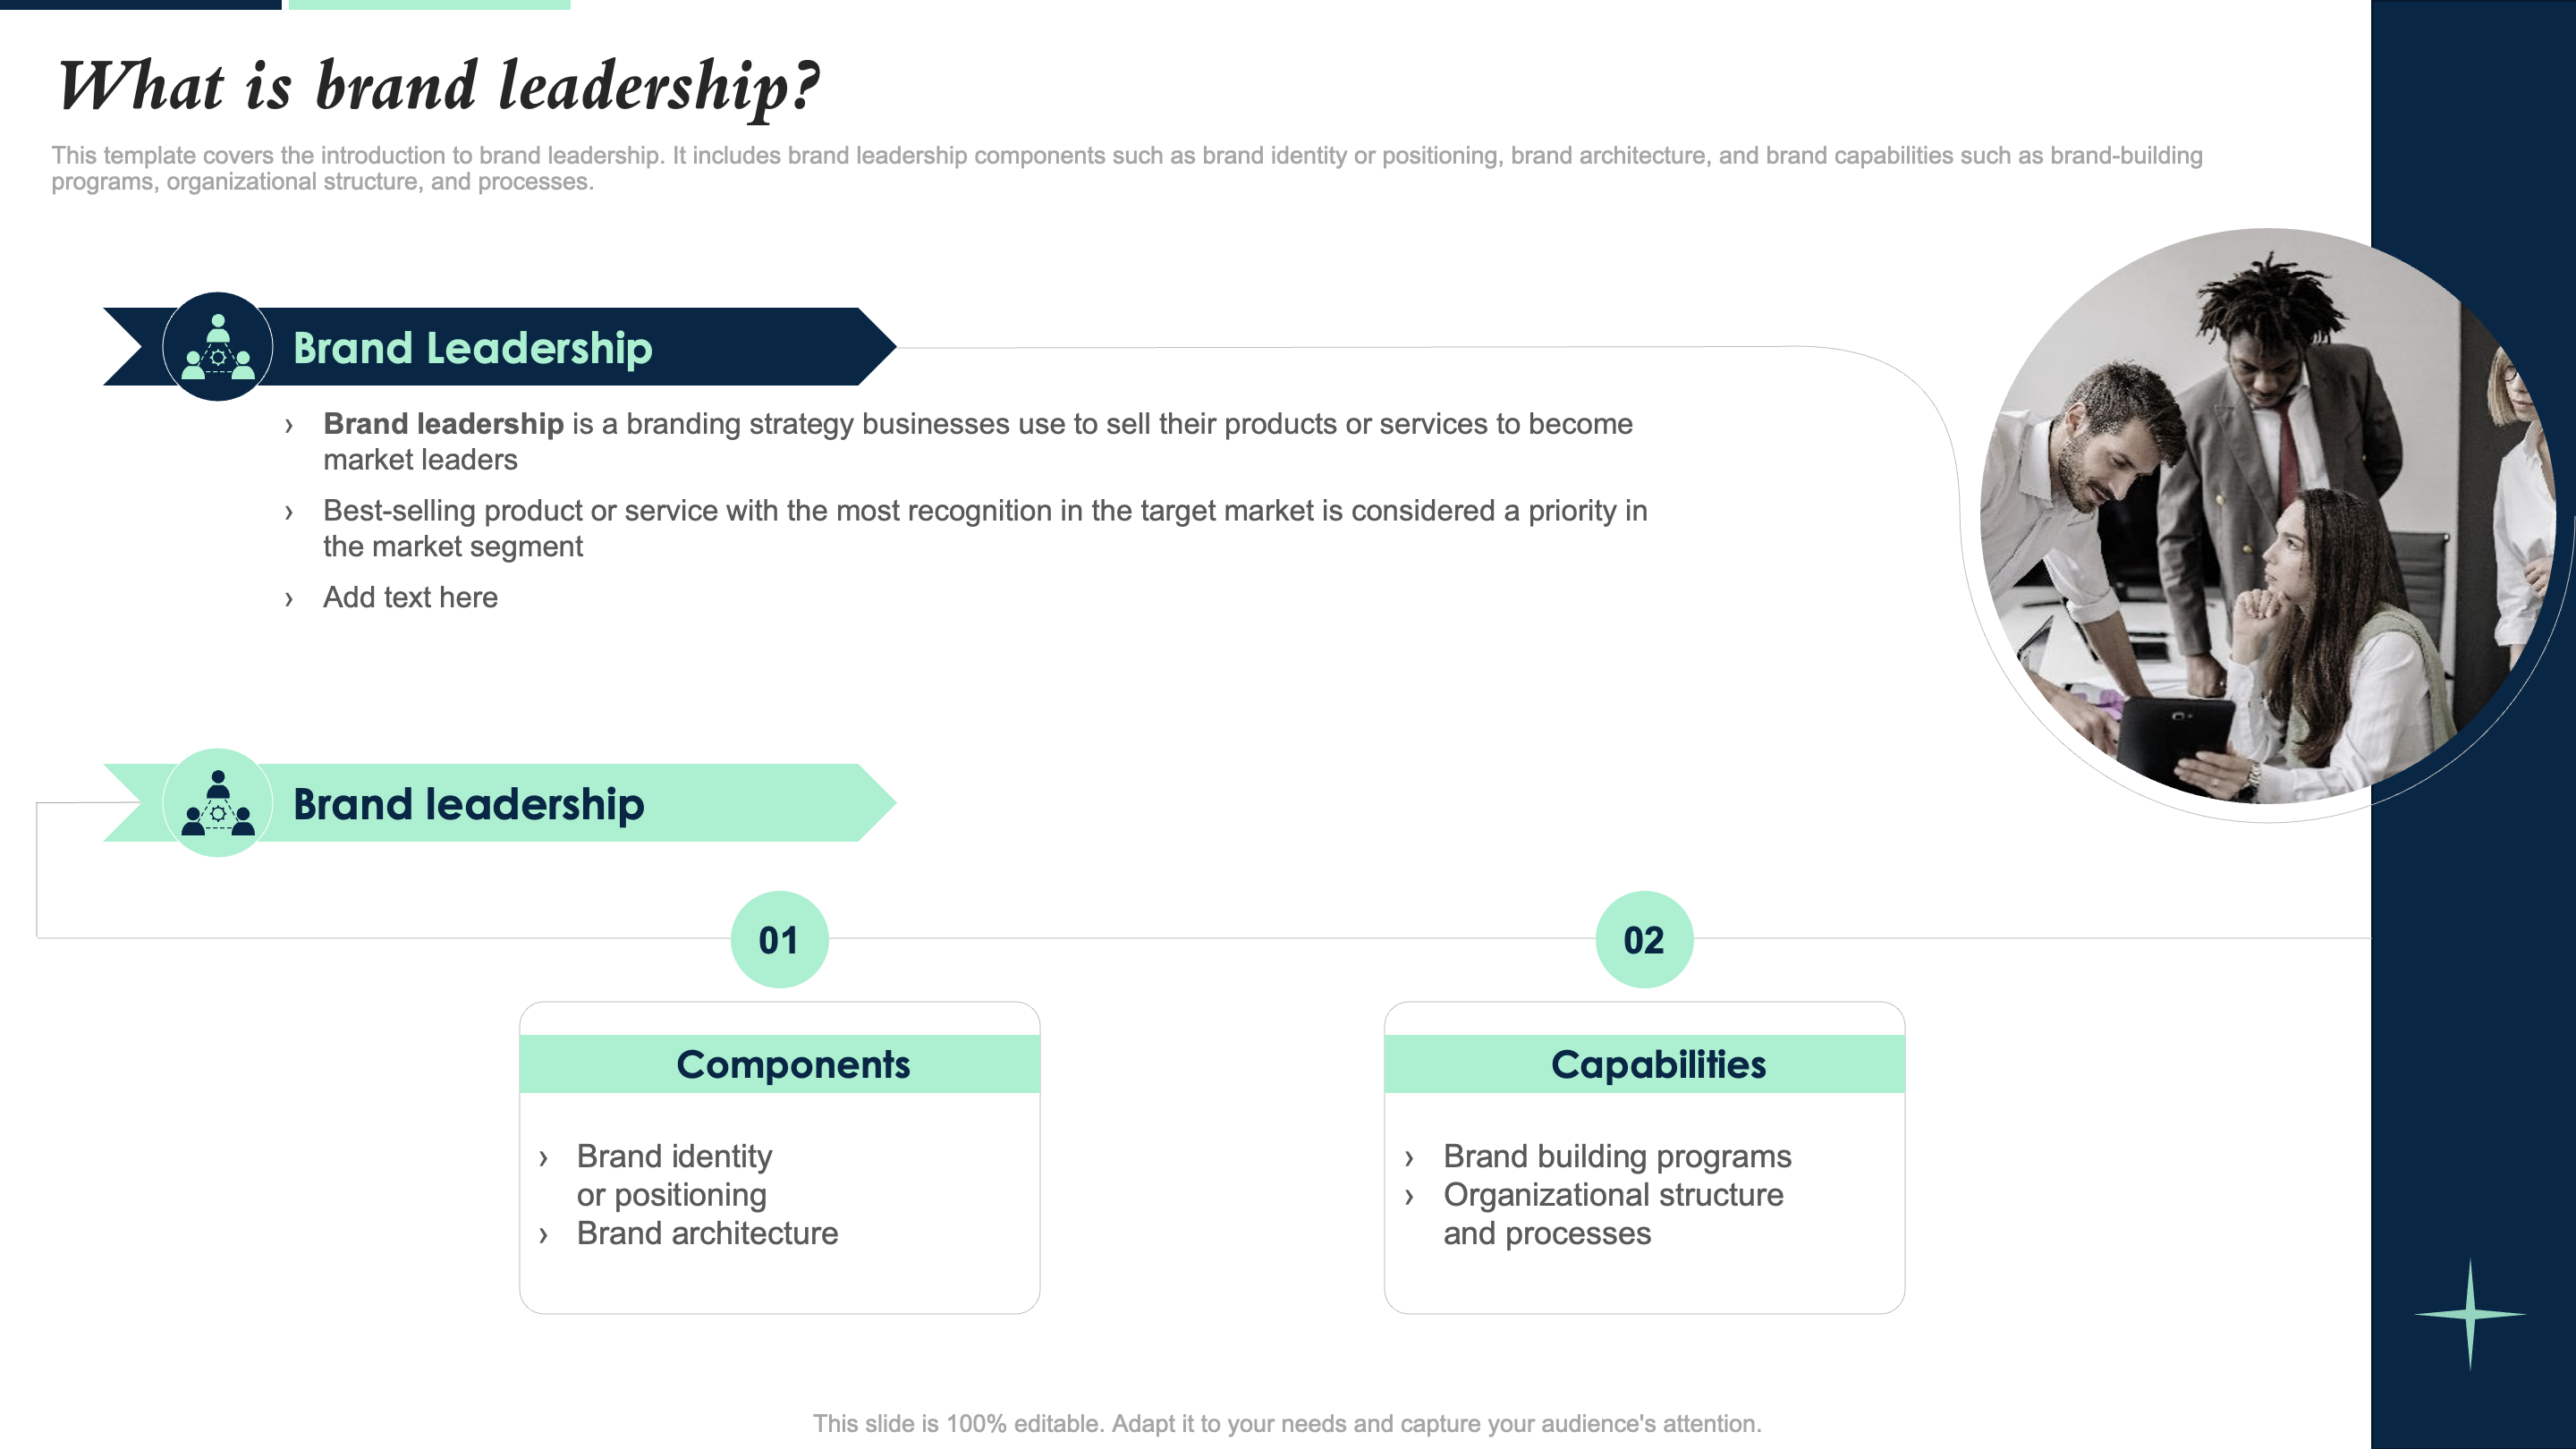 What is Brand Leadership?